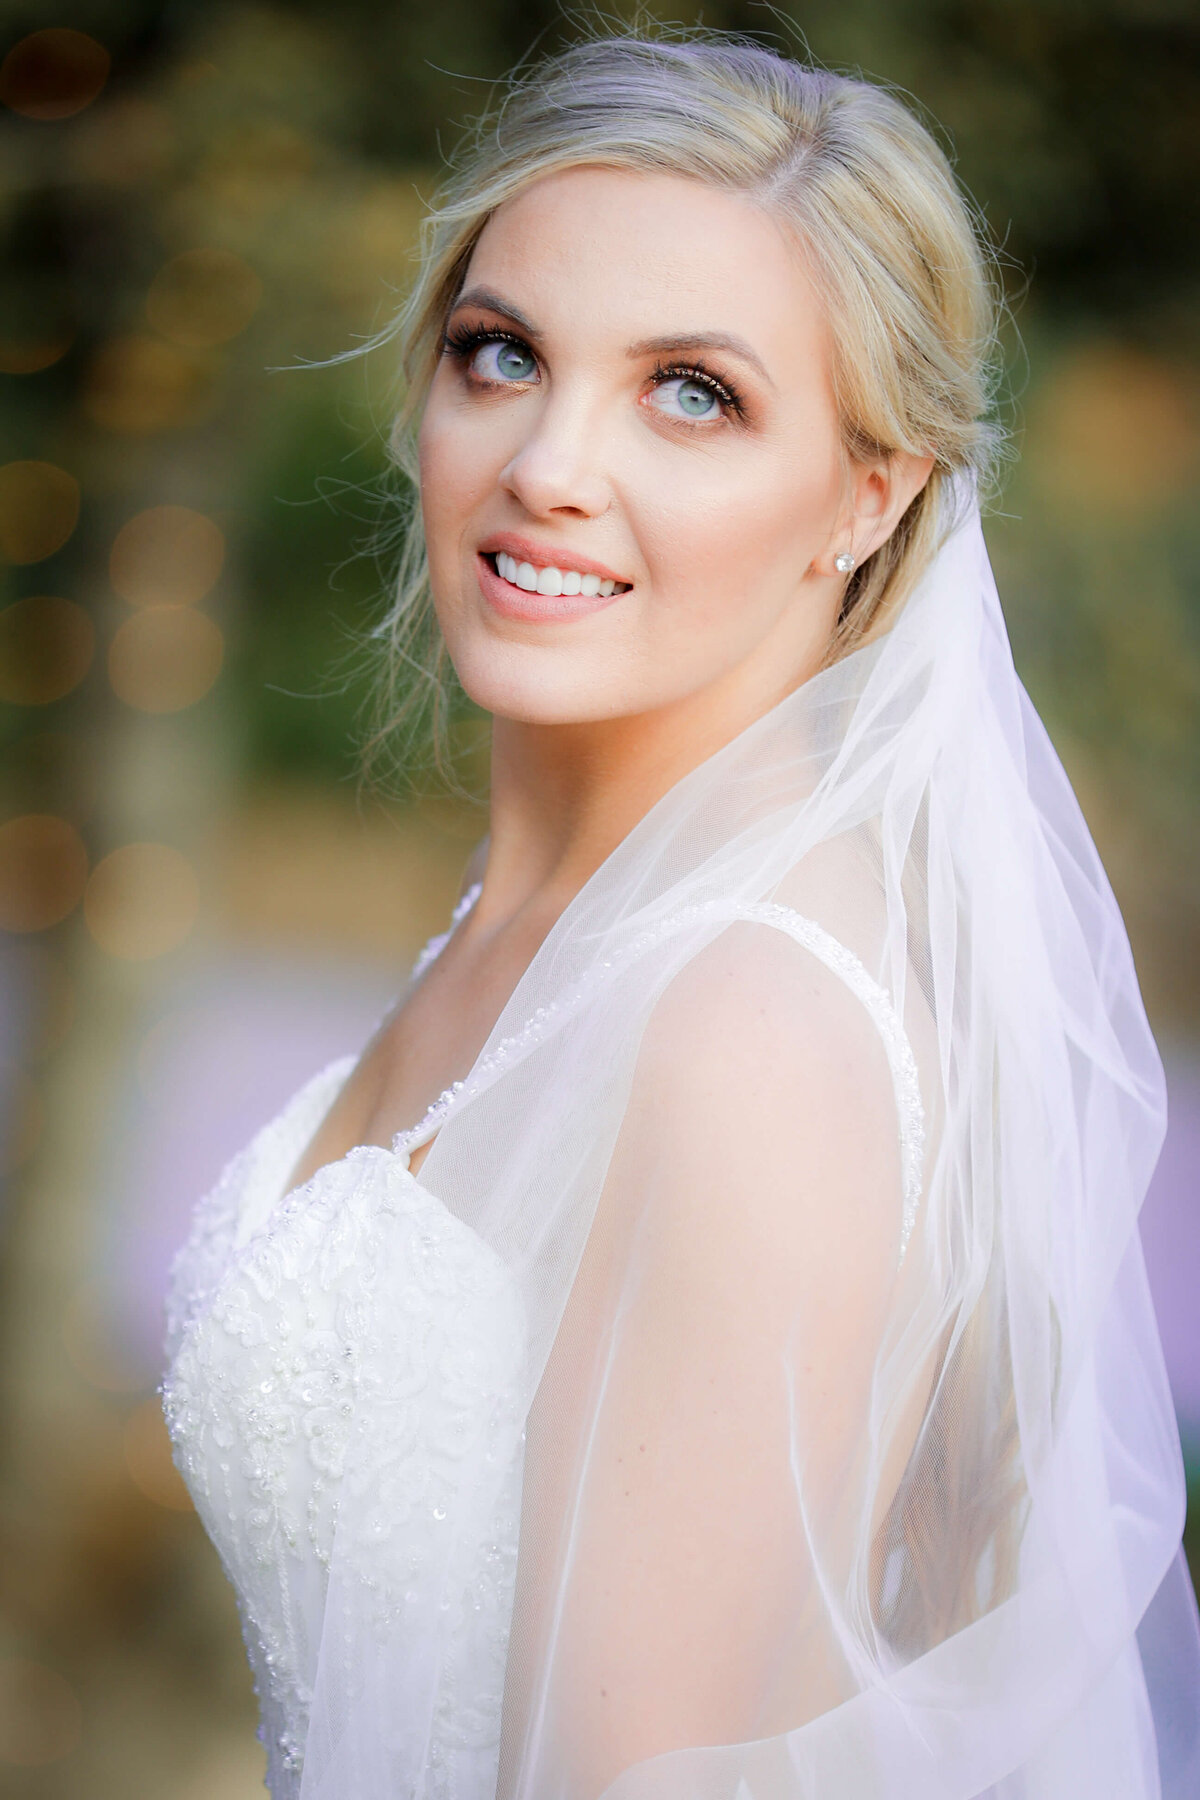 KS-Gray-Photography-newport-beach-wedding-photographer-bridal-portrait-bride-with-veil